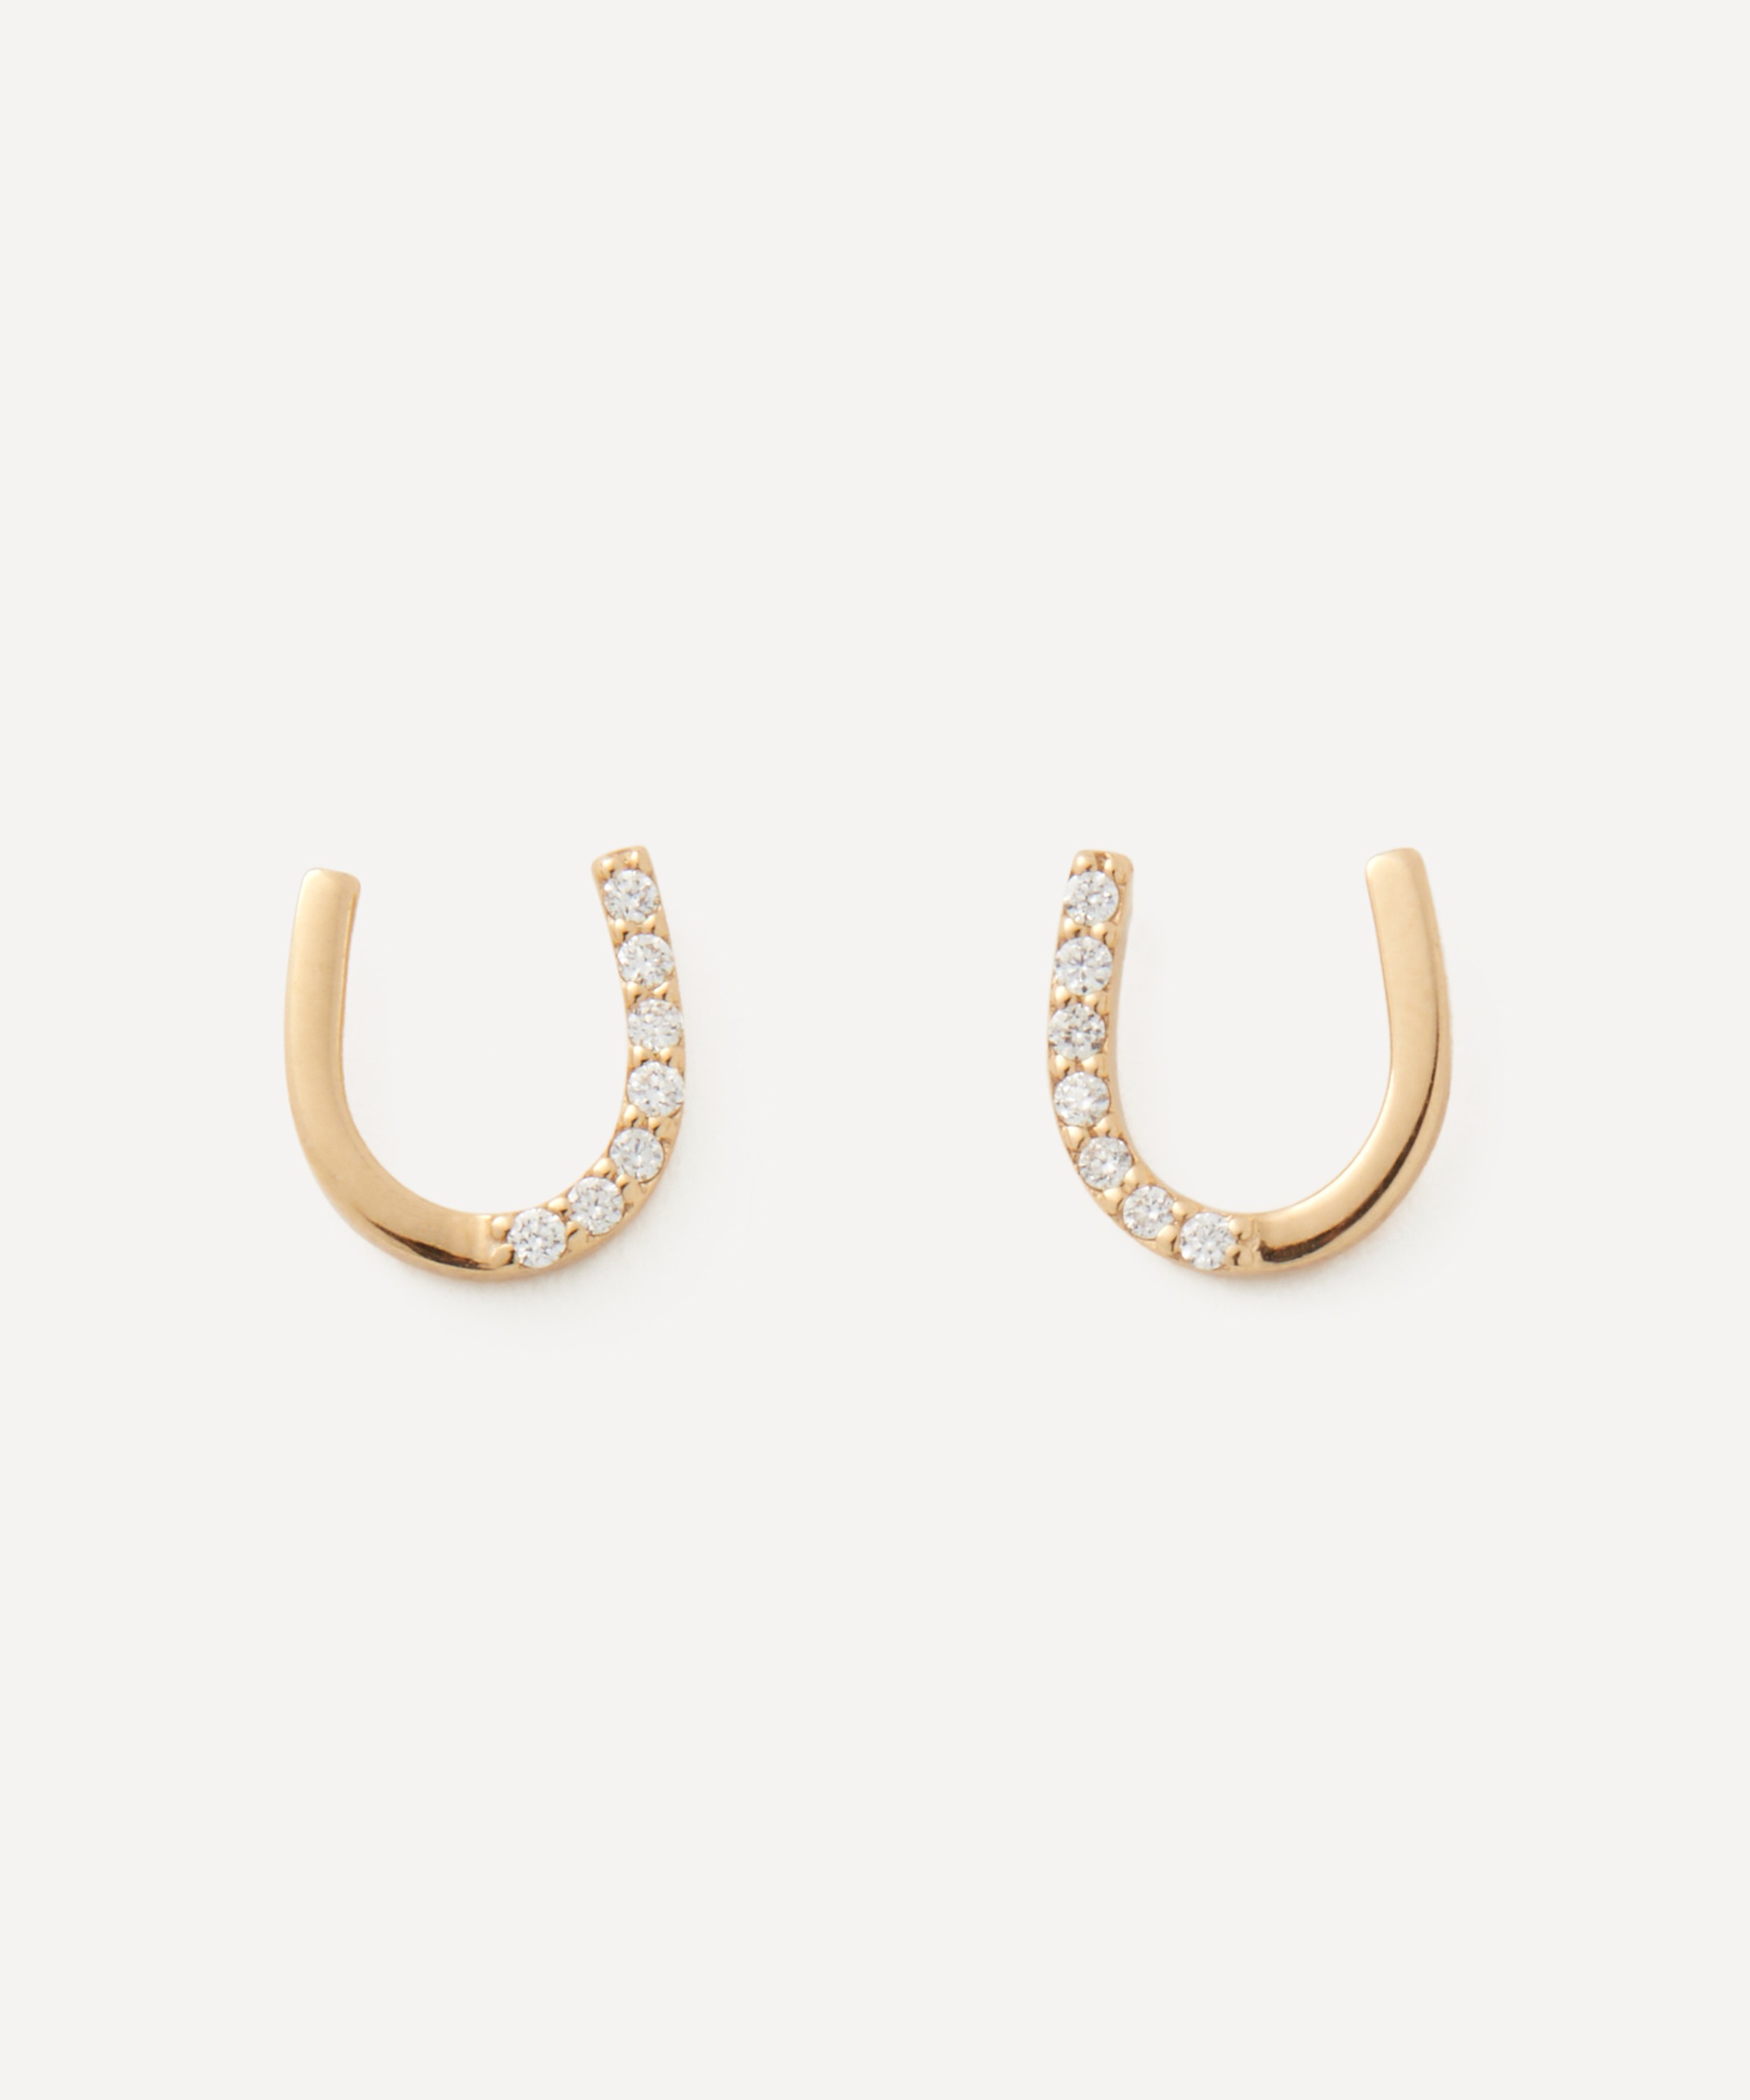 Melissa Joy Manning - 14ct Gold Diamond Horseshoe Stud Earrings